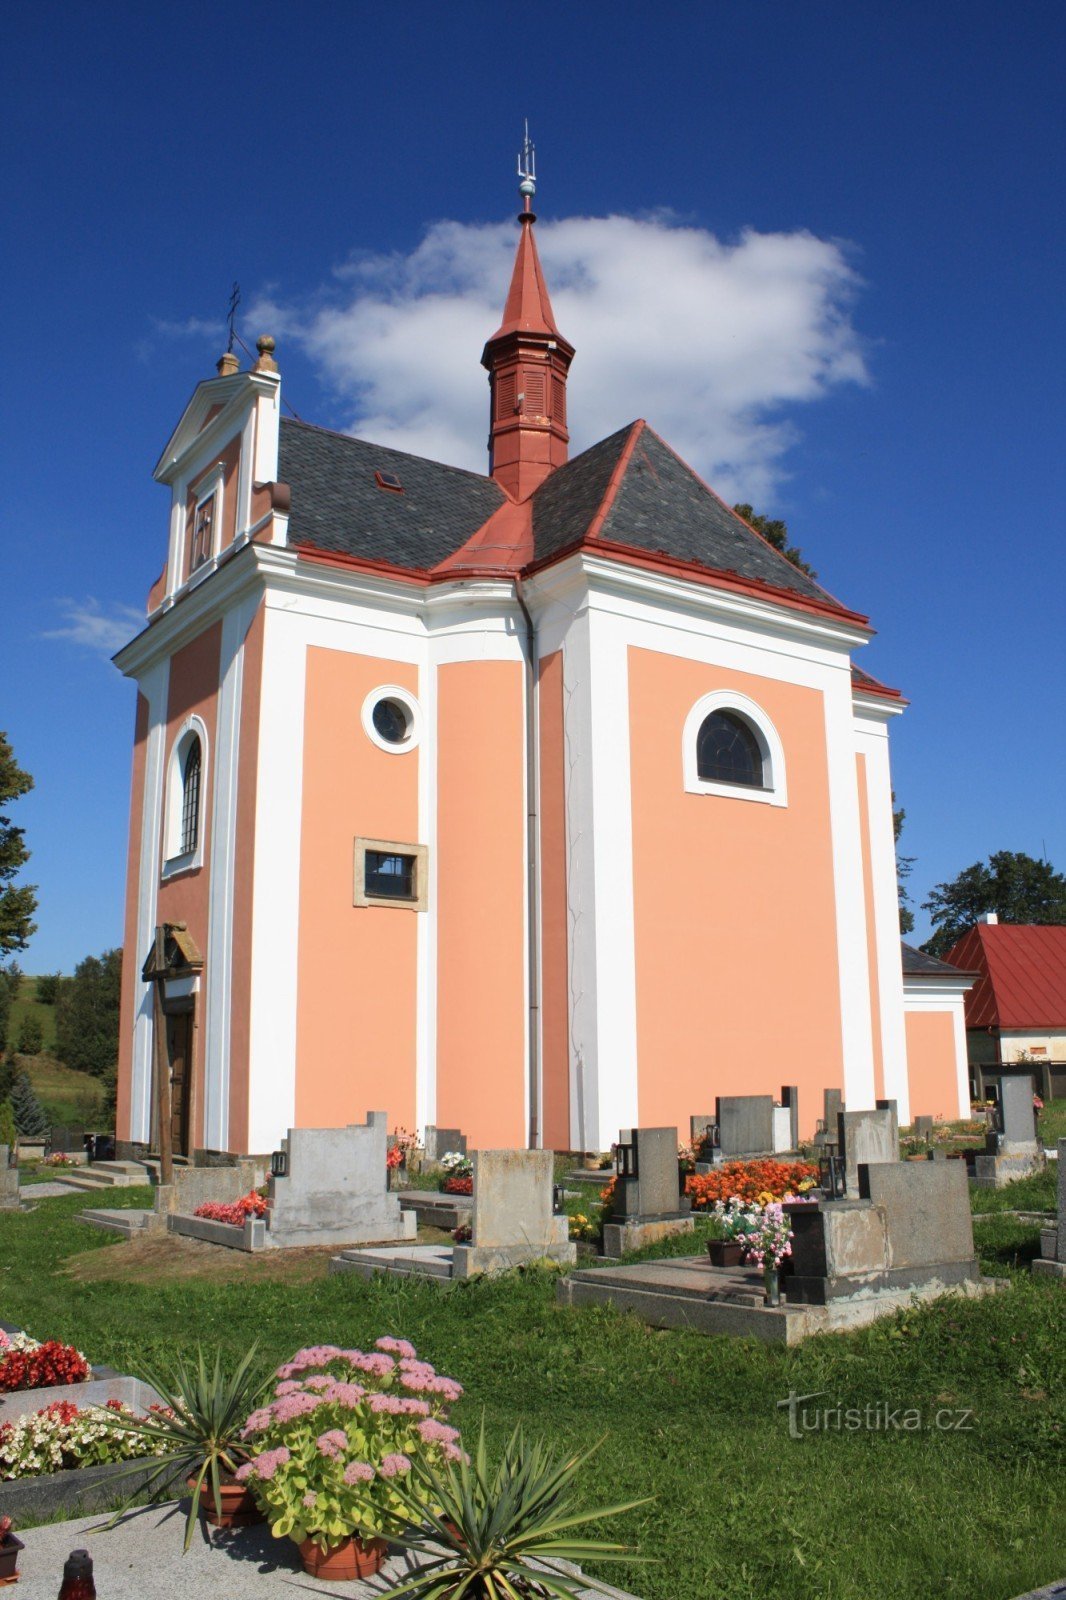 Pustá Kamenice - église de St. Anne